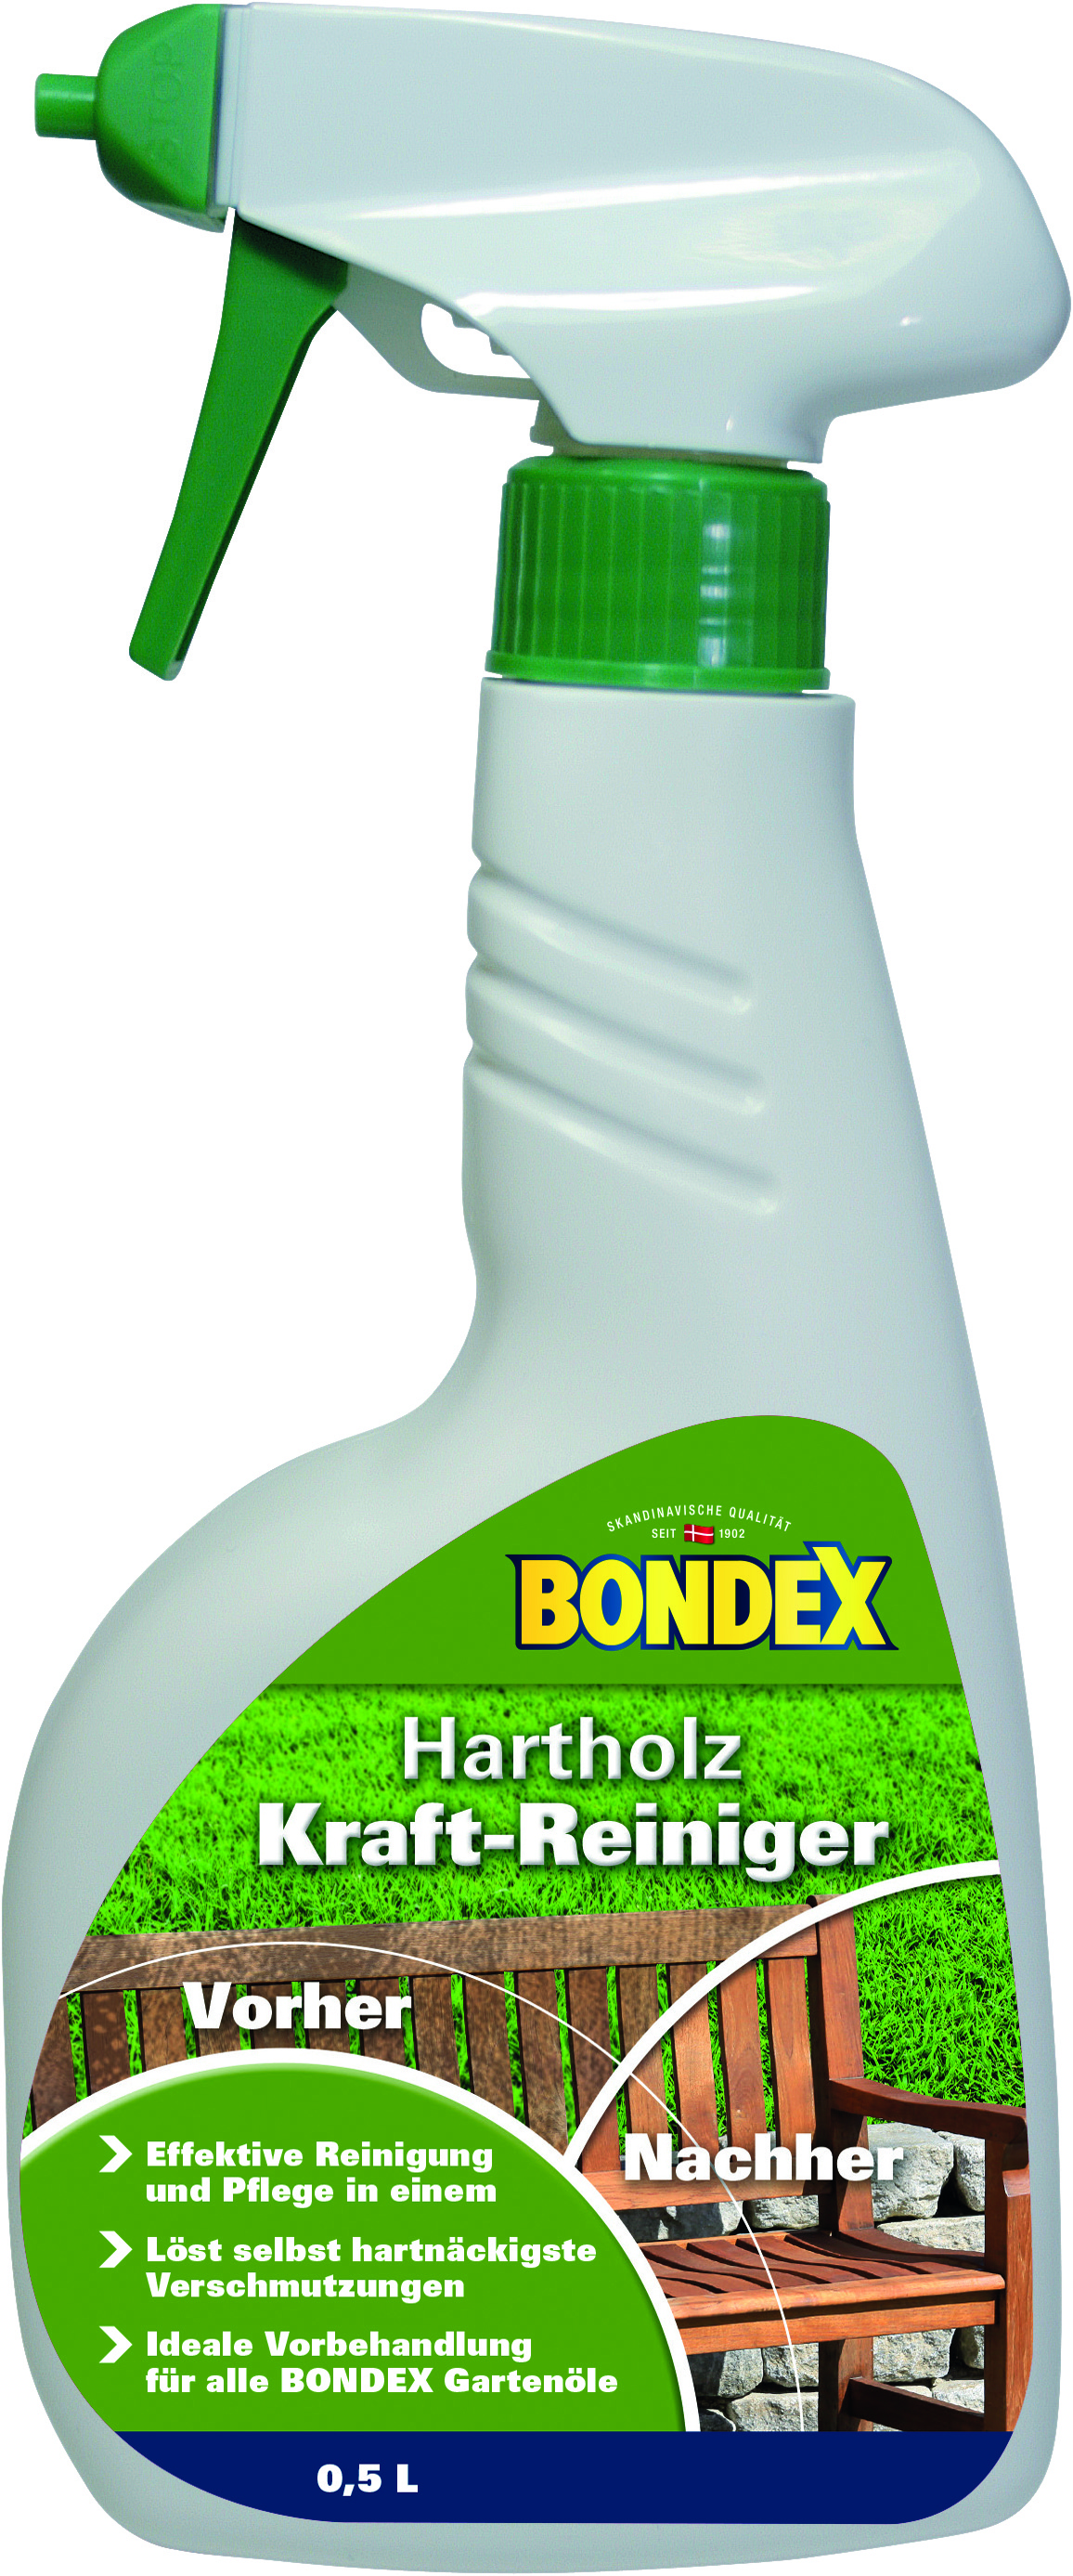 Bondex Hartholz Kraft-Reiniger, 0,5L